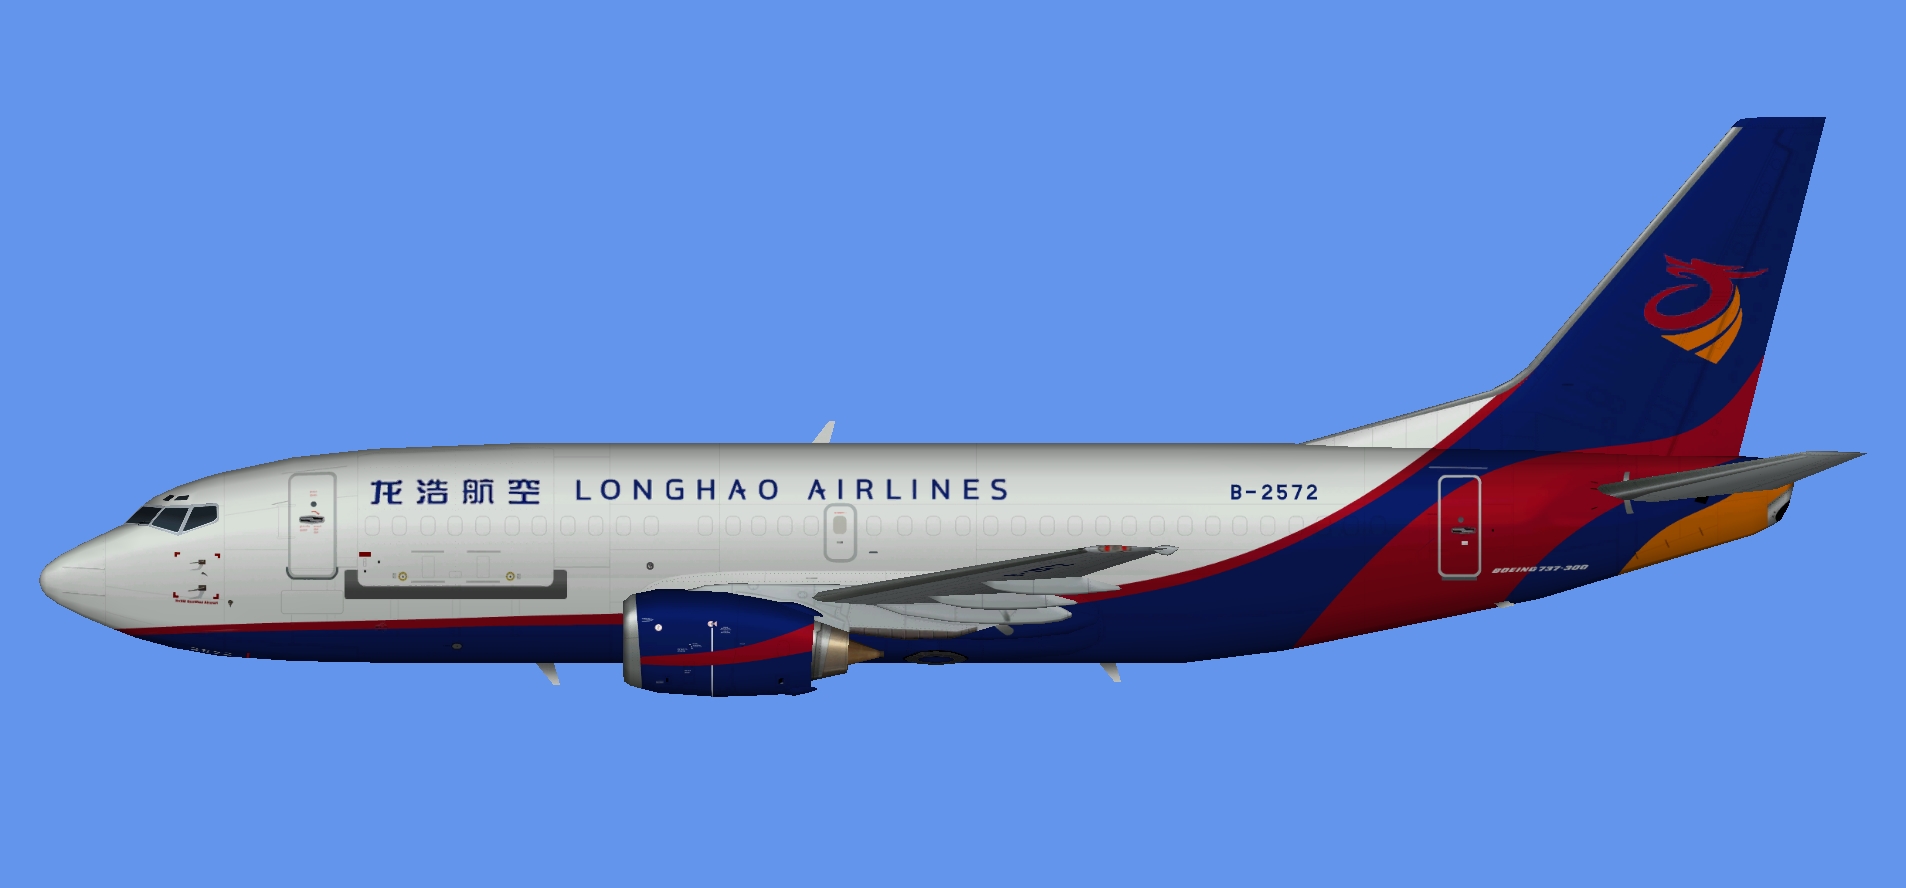 Longhao Airlines Boeing 737-300